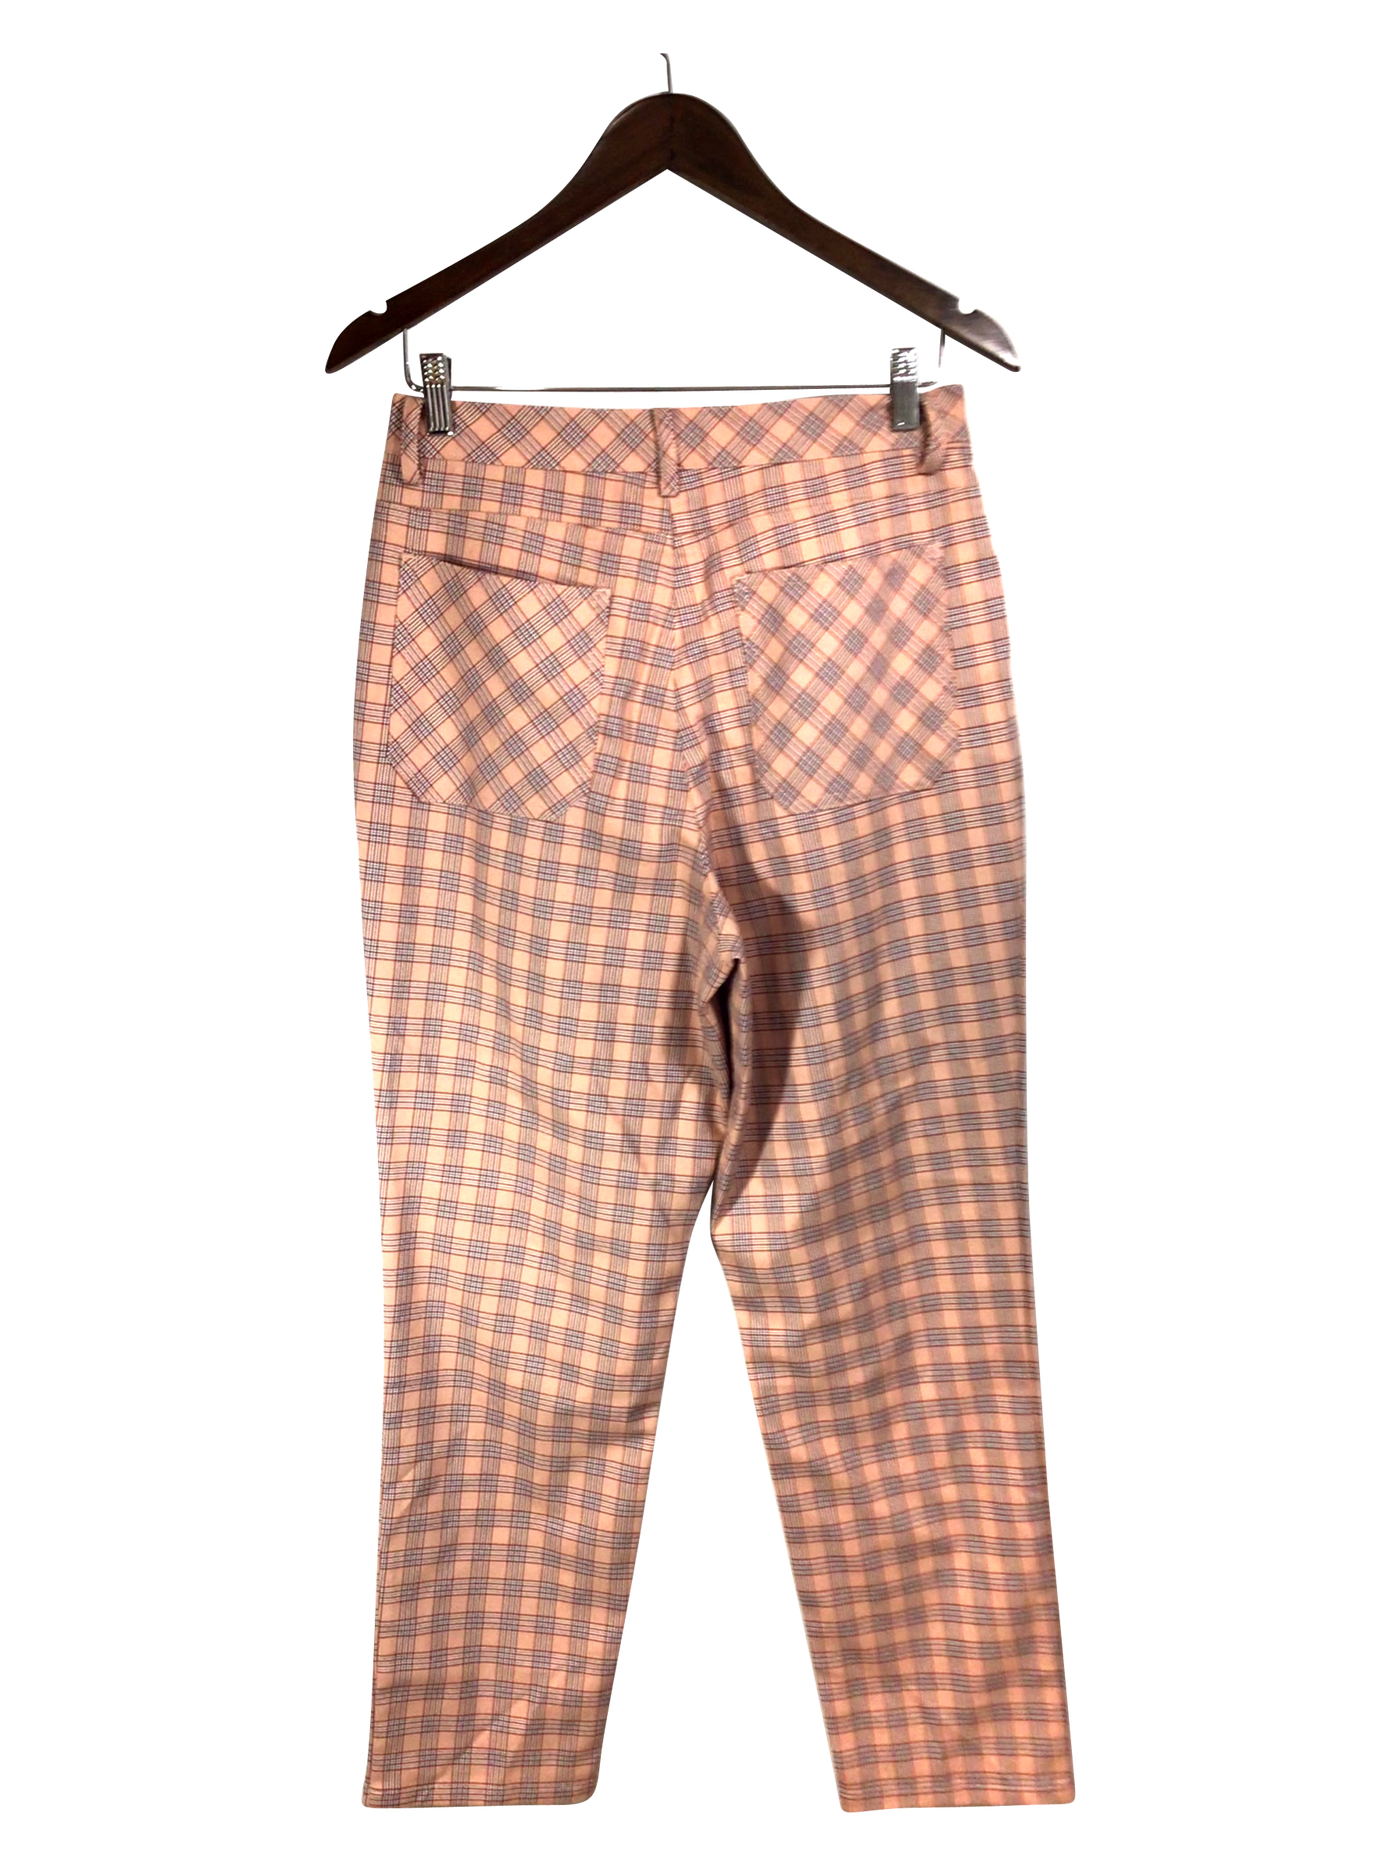 TWIK Pant Regular fit in Pink - Size 9 | 10.39 $ KOOP